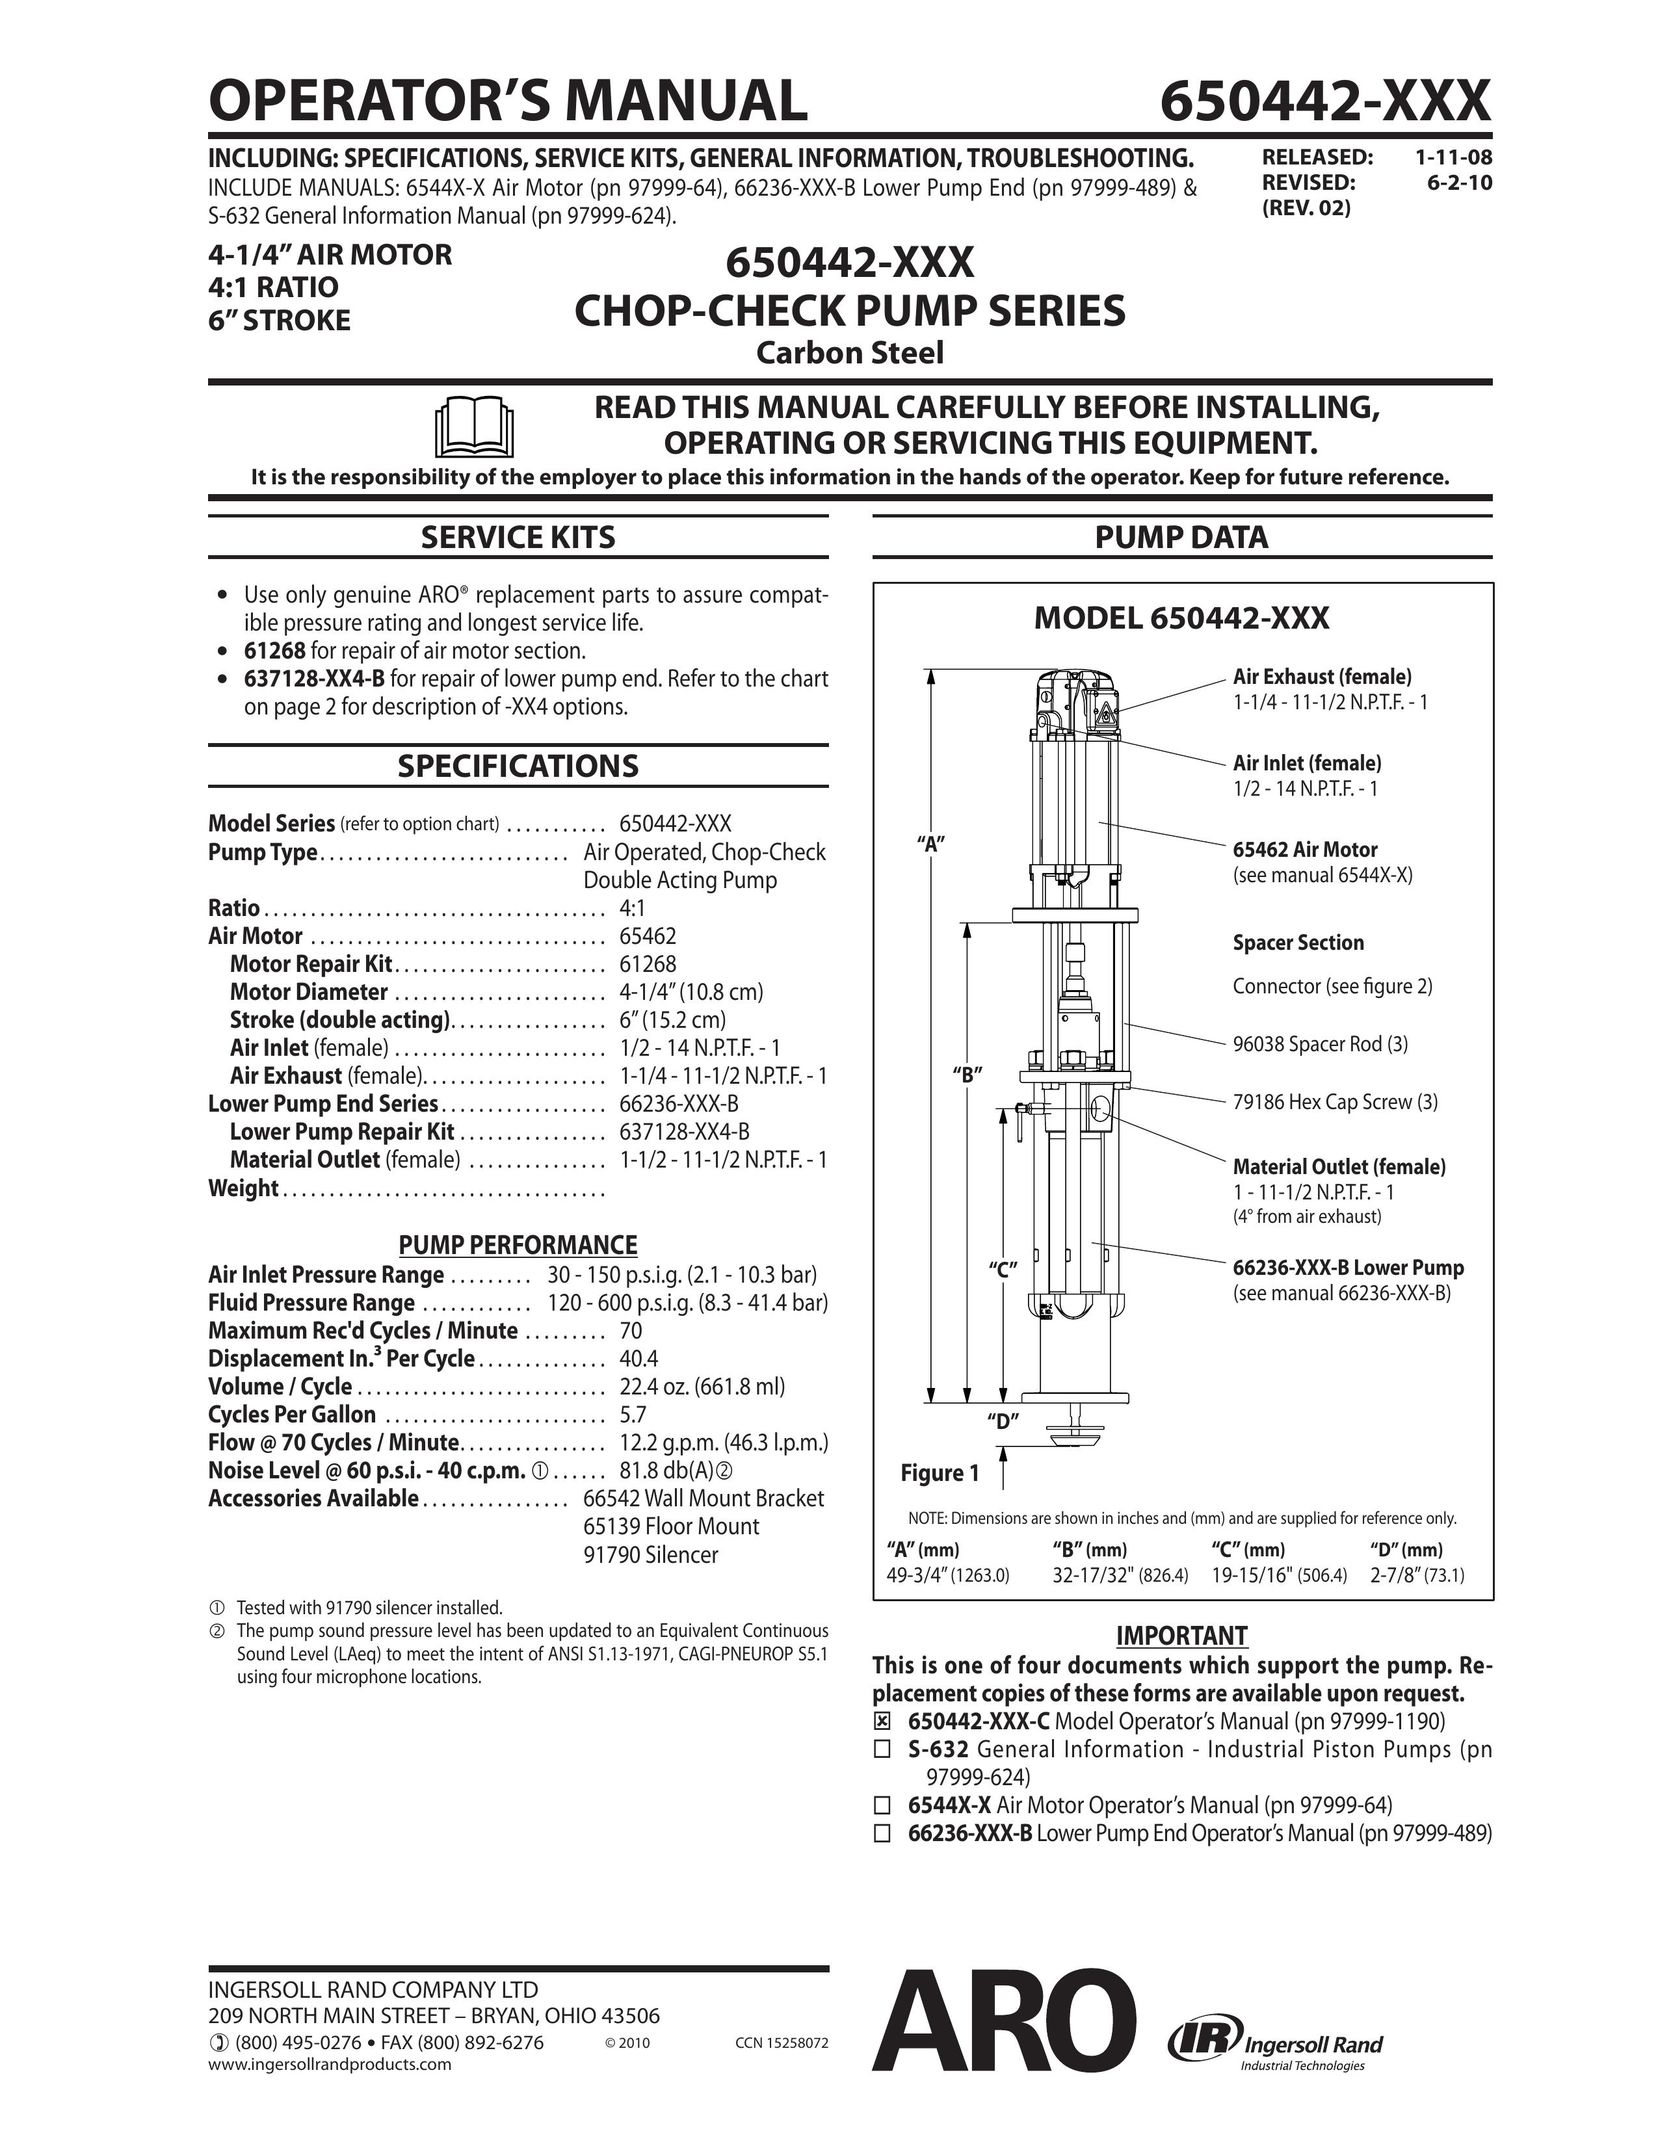 Ingersoll-Rand 650442-XXX Air Compressor User Manual